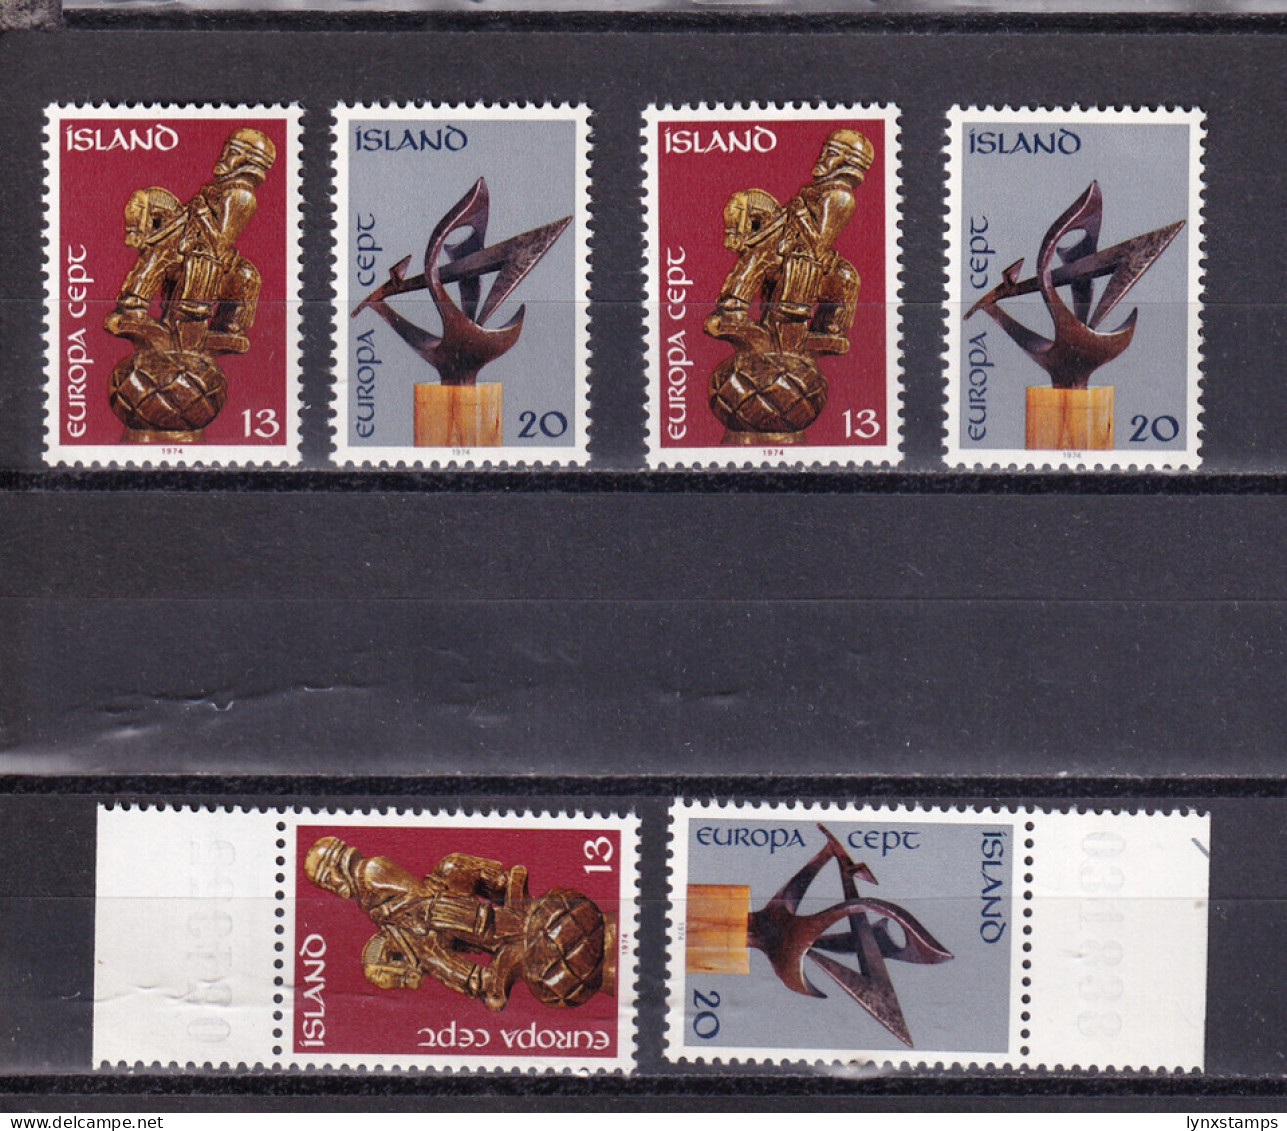 LI03 Iceland Europa (C.E.P.T.) 1974 - Sculptures Mint Stamps Selection - Ungebraucht